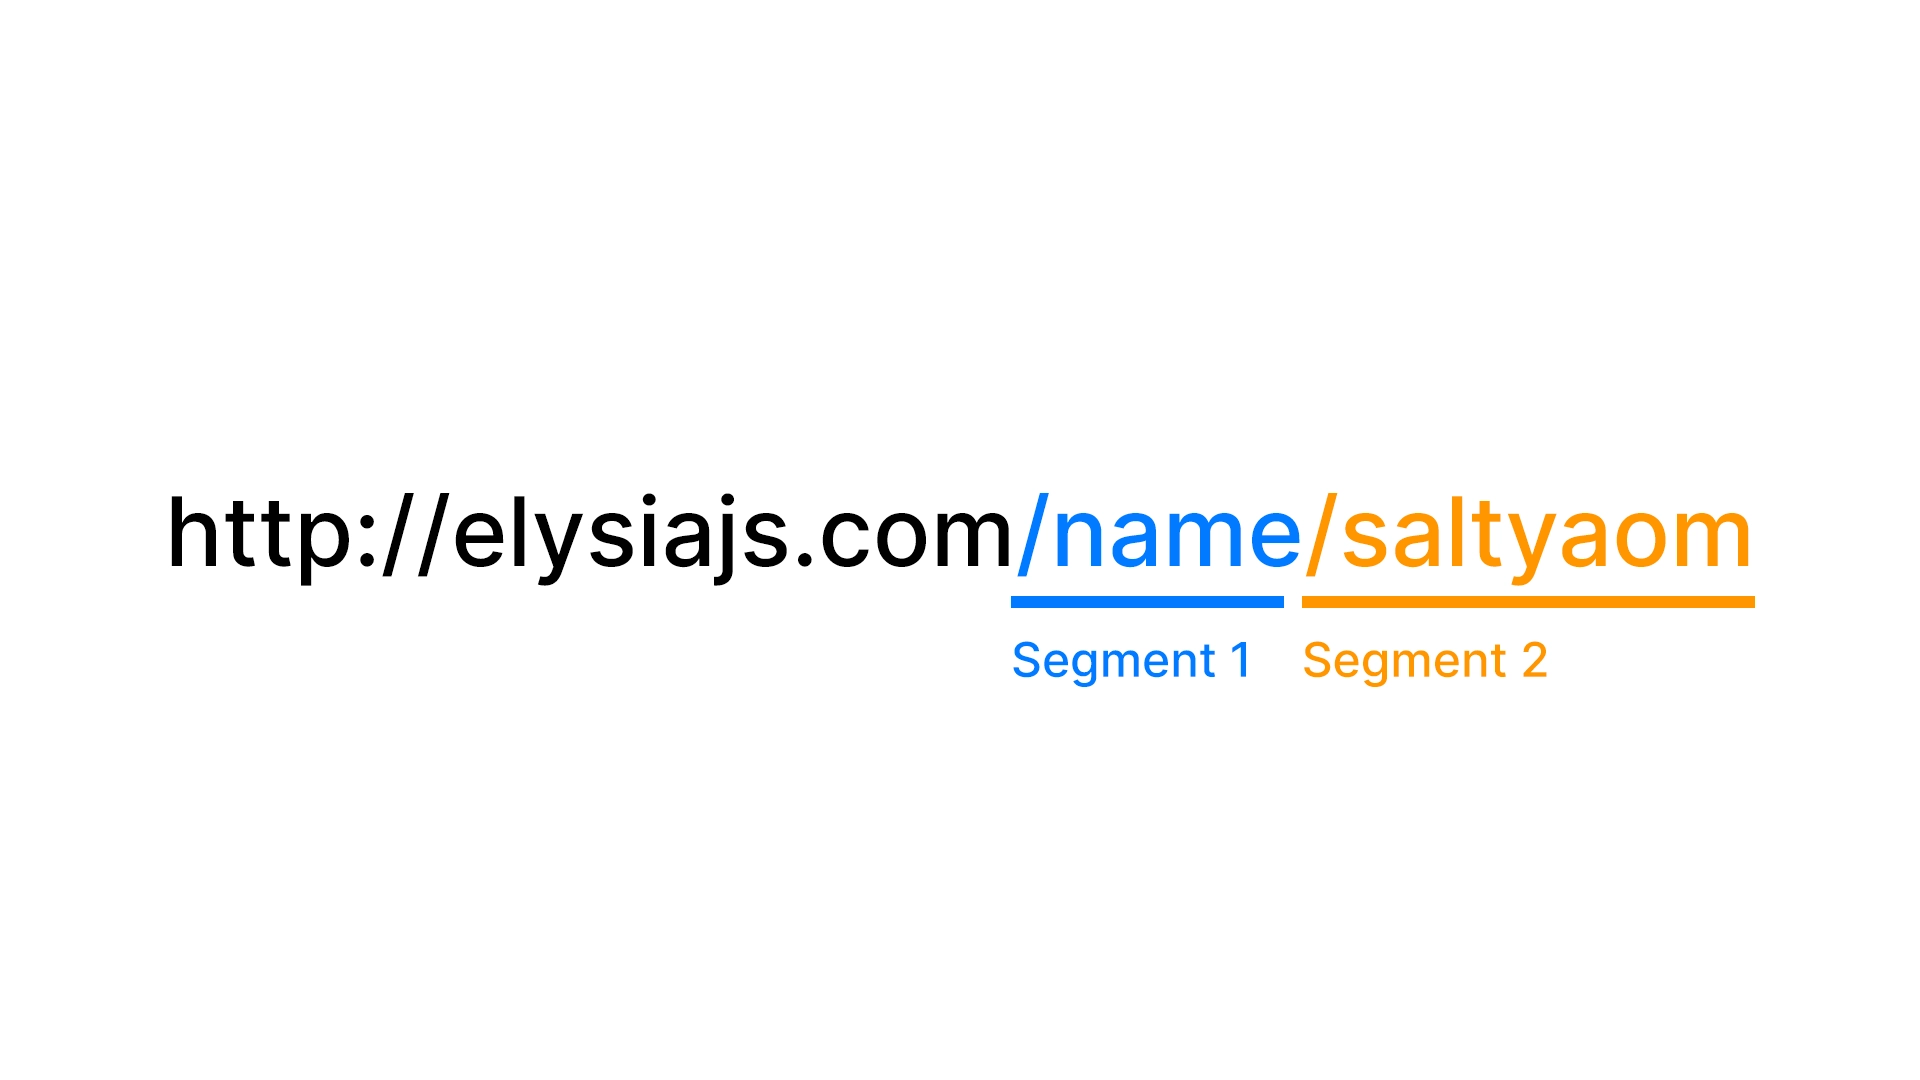 Representation of URL segments